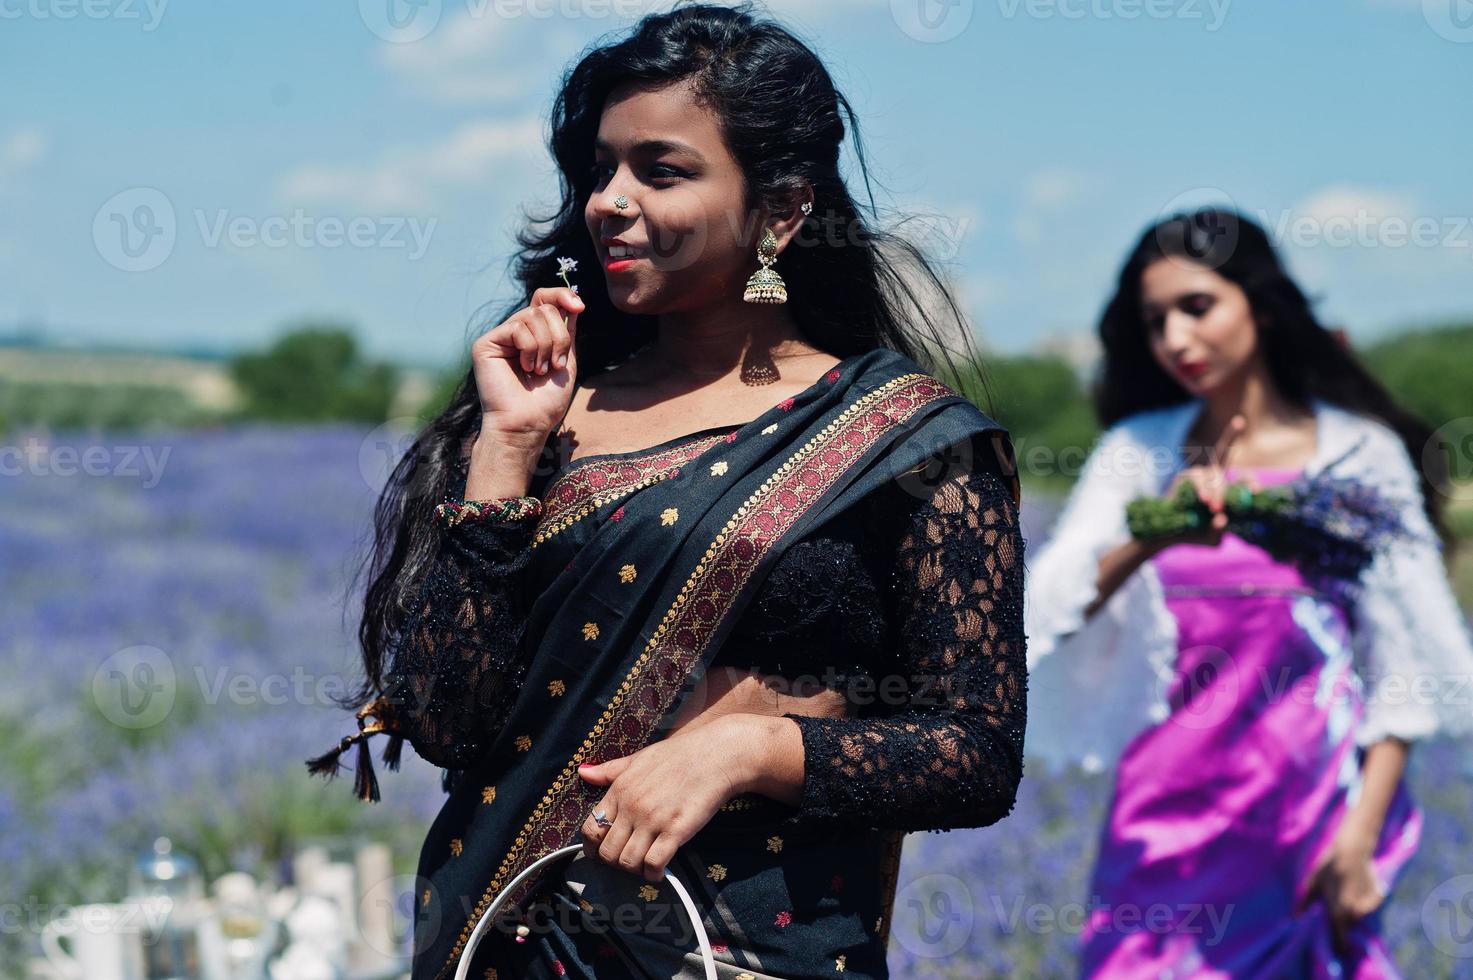 Two beautiful indian girsl wear saree india traditional dress in purple lavender field. photo